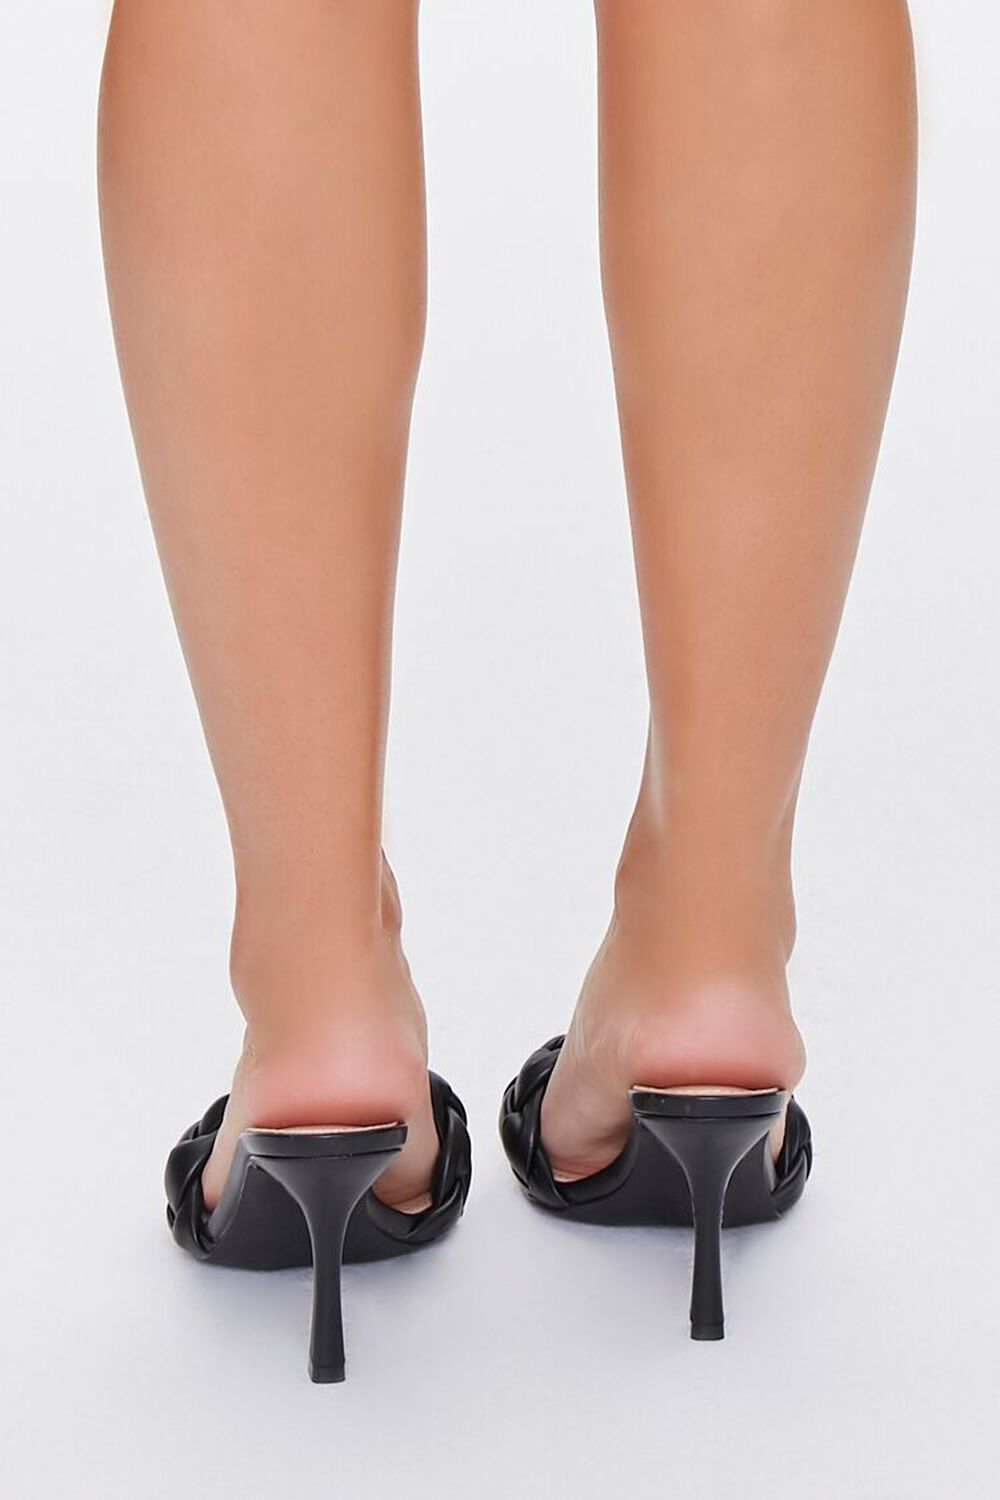 BLACK Braided Square-Toe Stiletto Heels, image 3